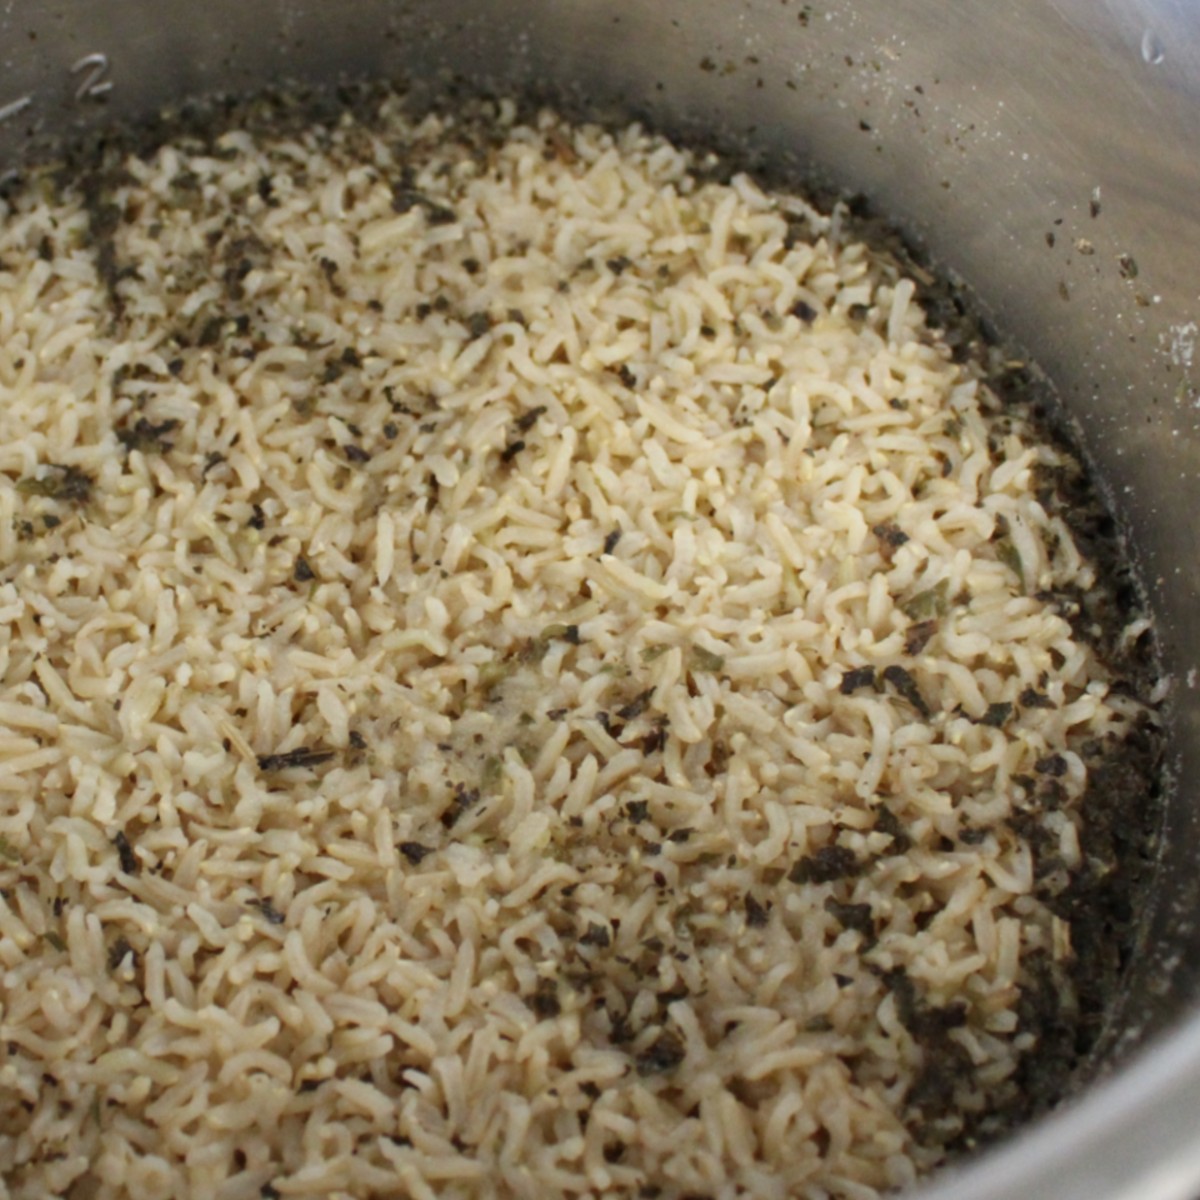 Ways To Cook Brown Rice